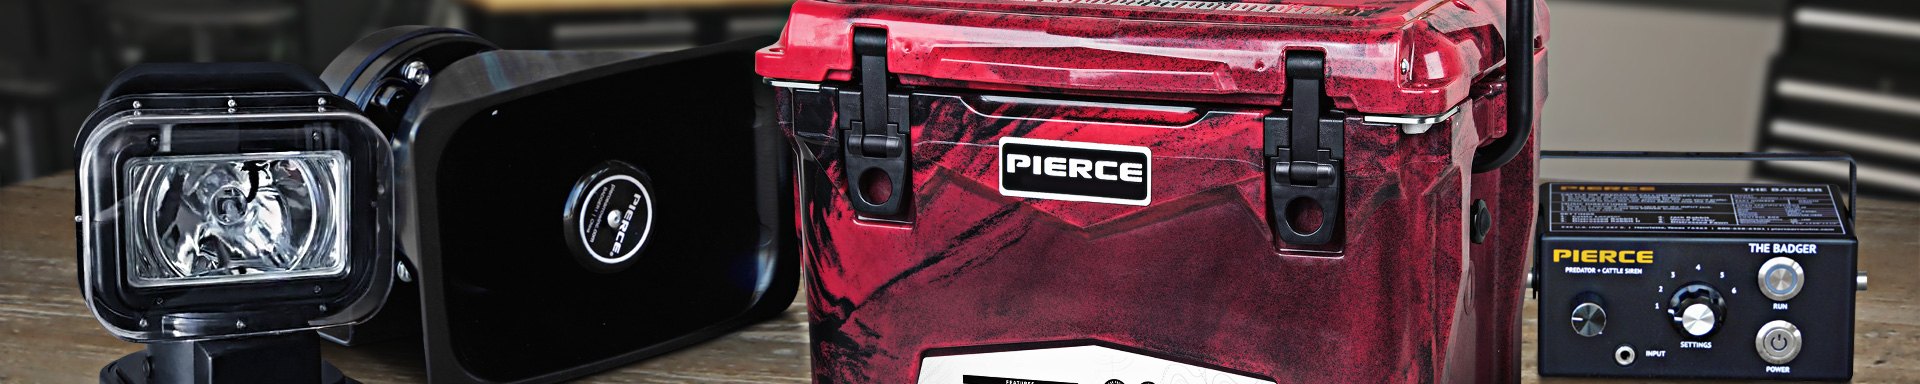 Pierce Automotive Lifts & Stands